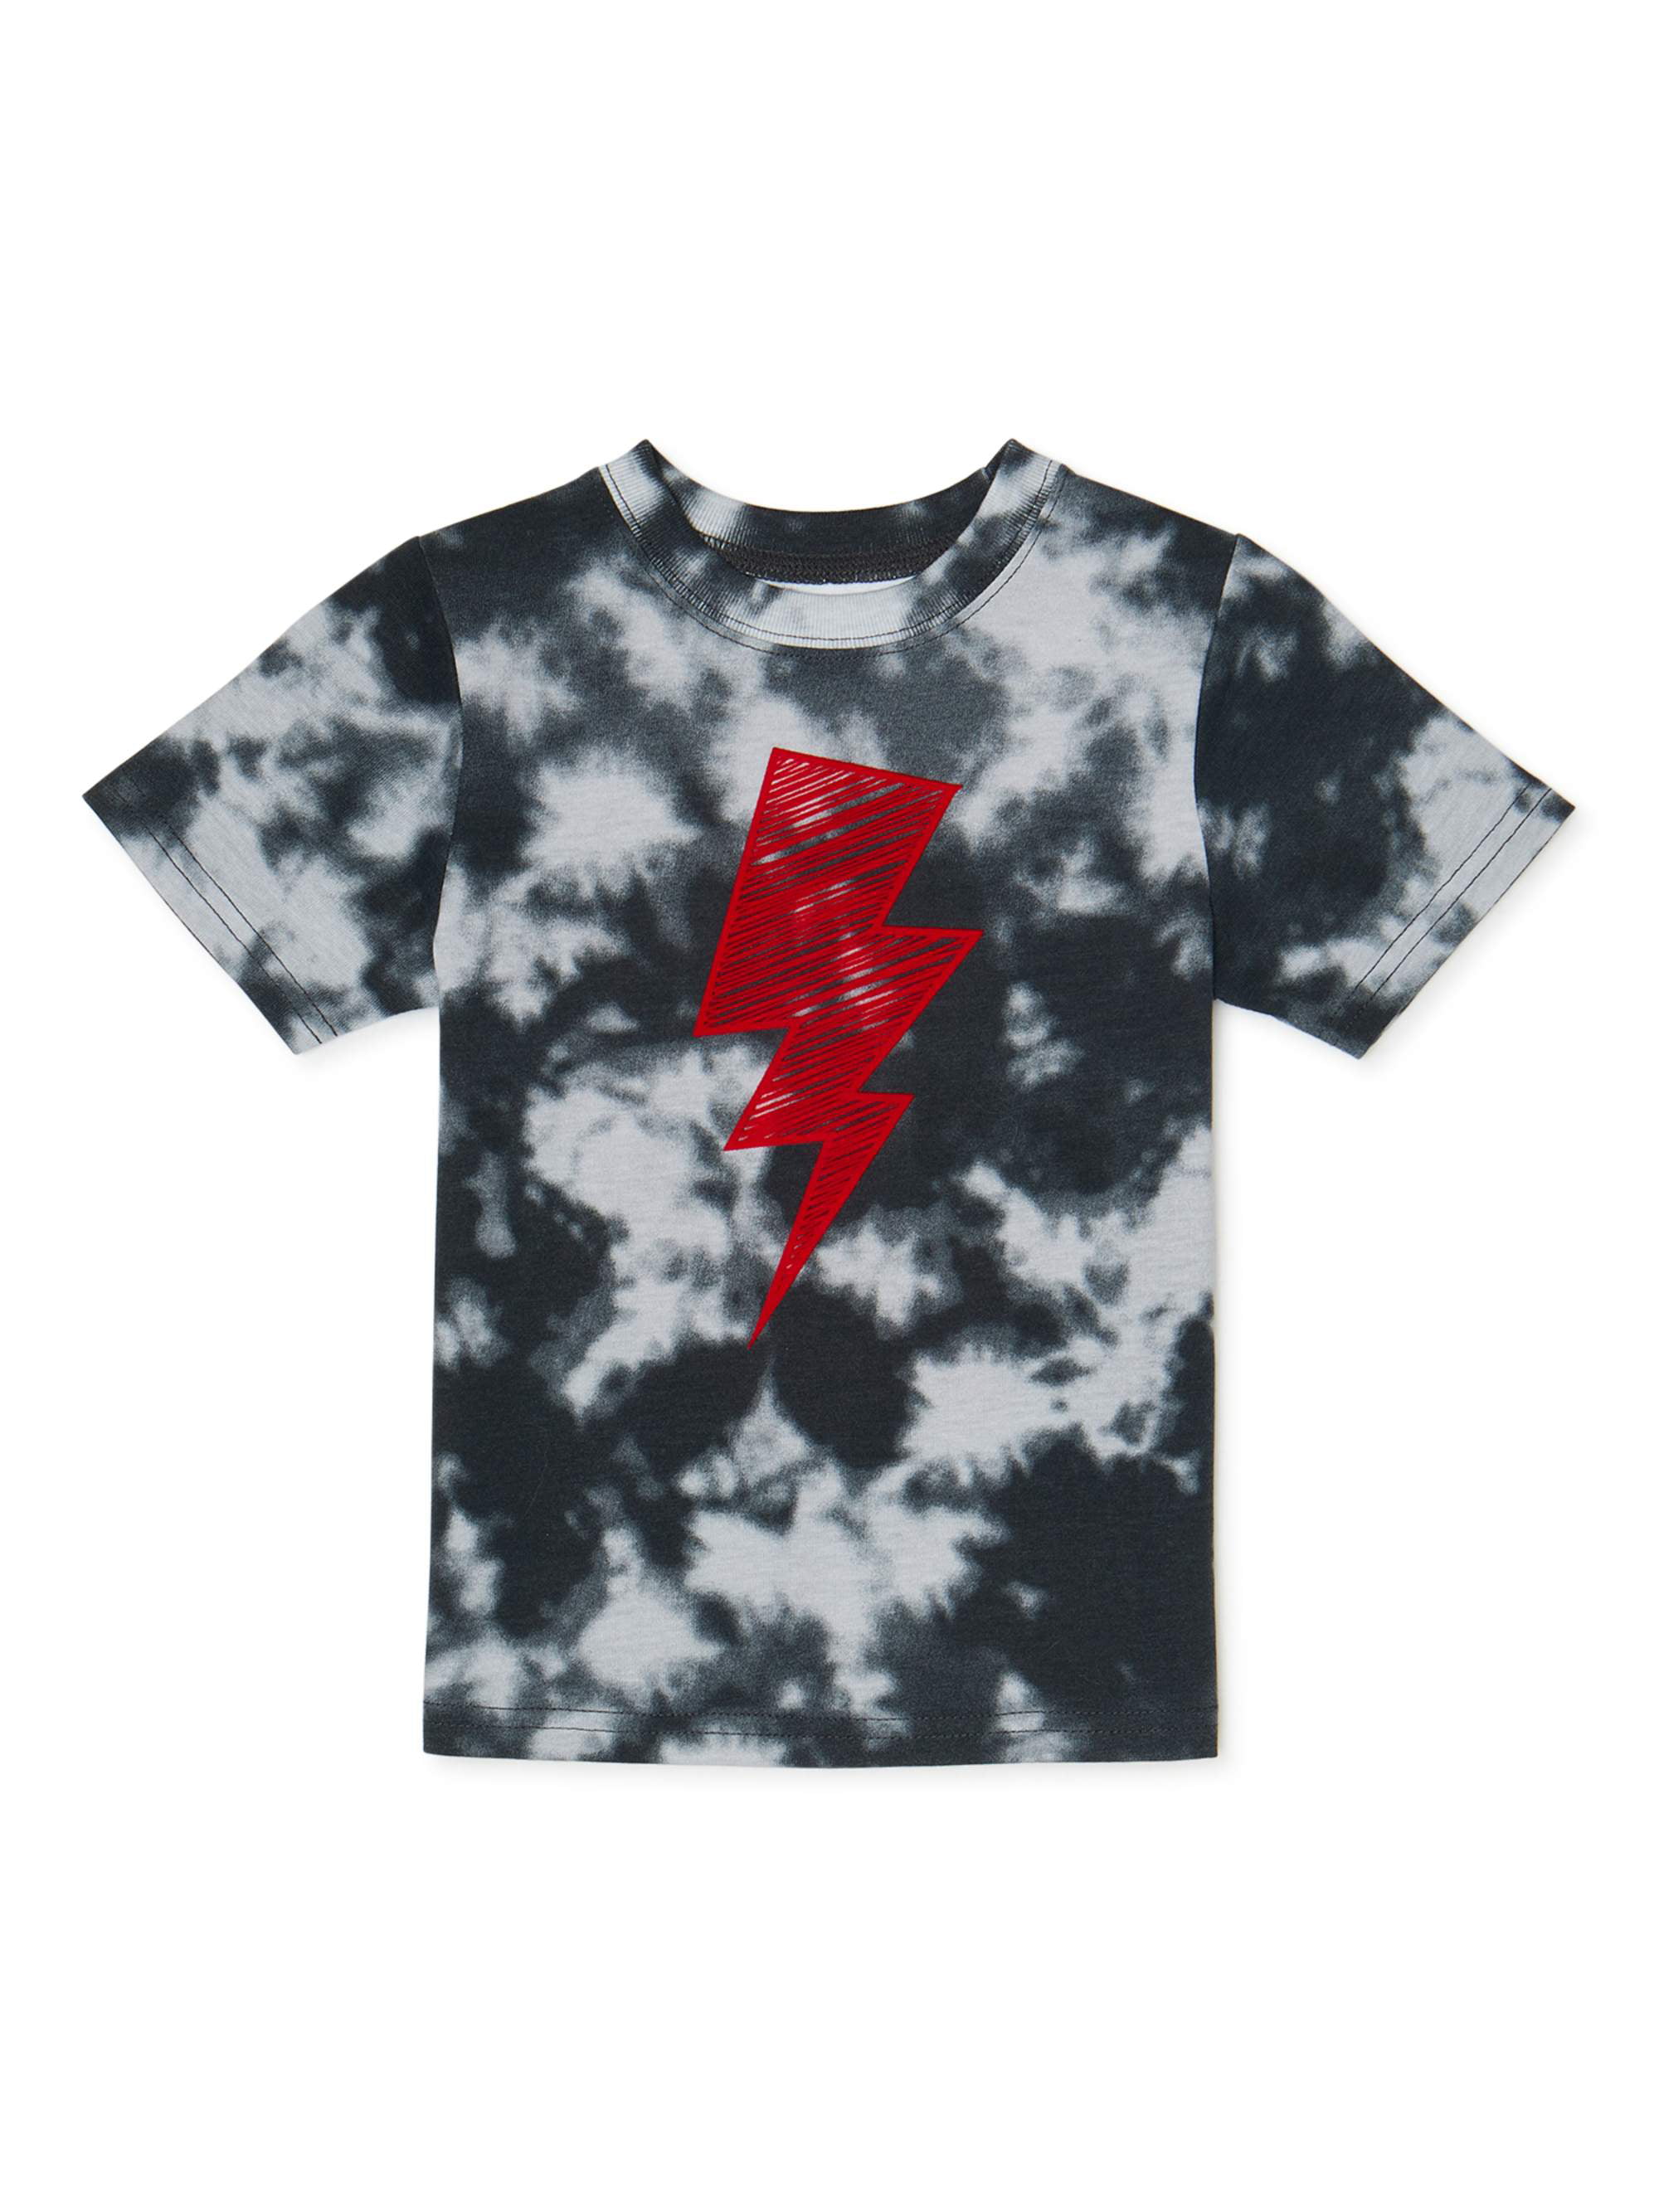 NNaseg Kids Casual Tee T-eam L-iquid Logo 3D Print Graphics T-Shirt for Boys Girls